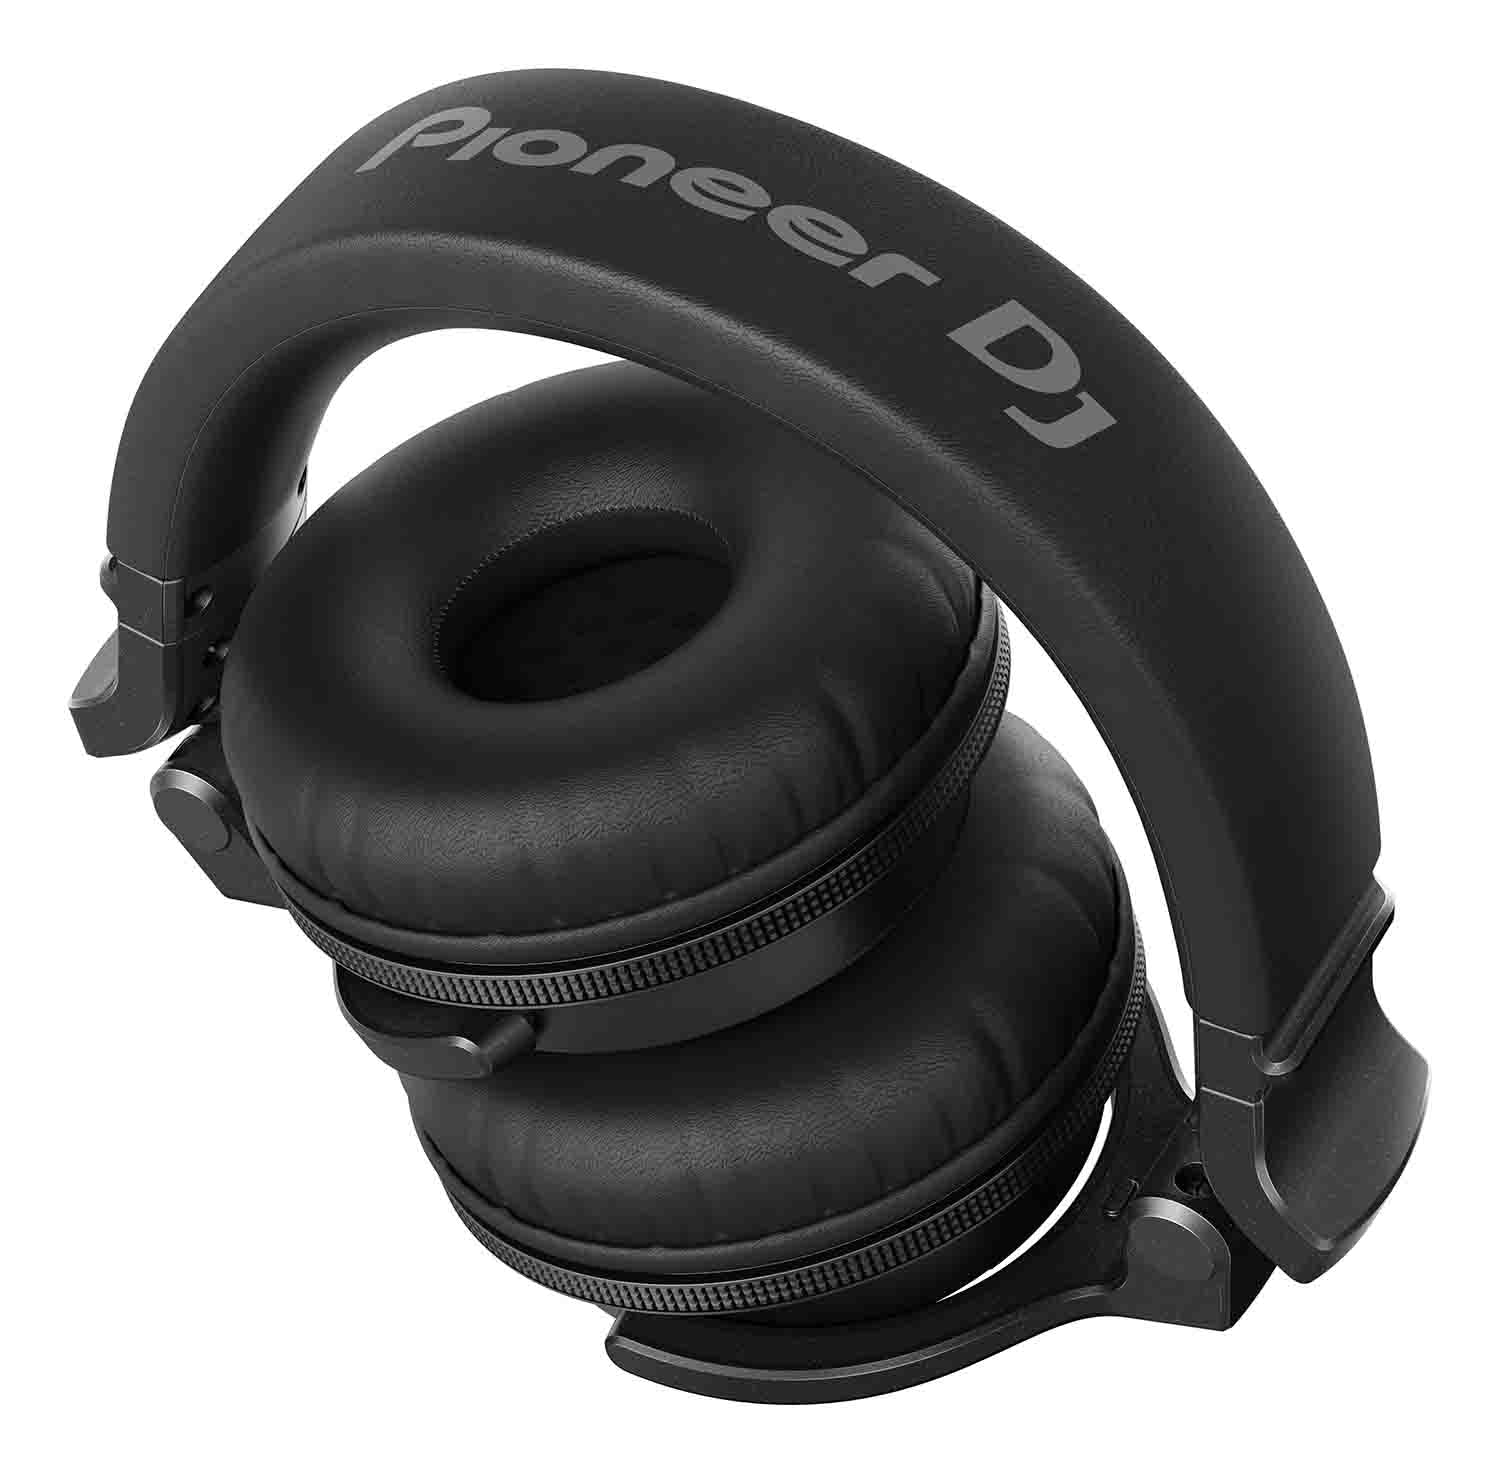 B-Stock: Pioneer DJ HDJ-CUE1BT-K On-Ear DJ Headphones with Bluetooth - Black by Pioneer DJ